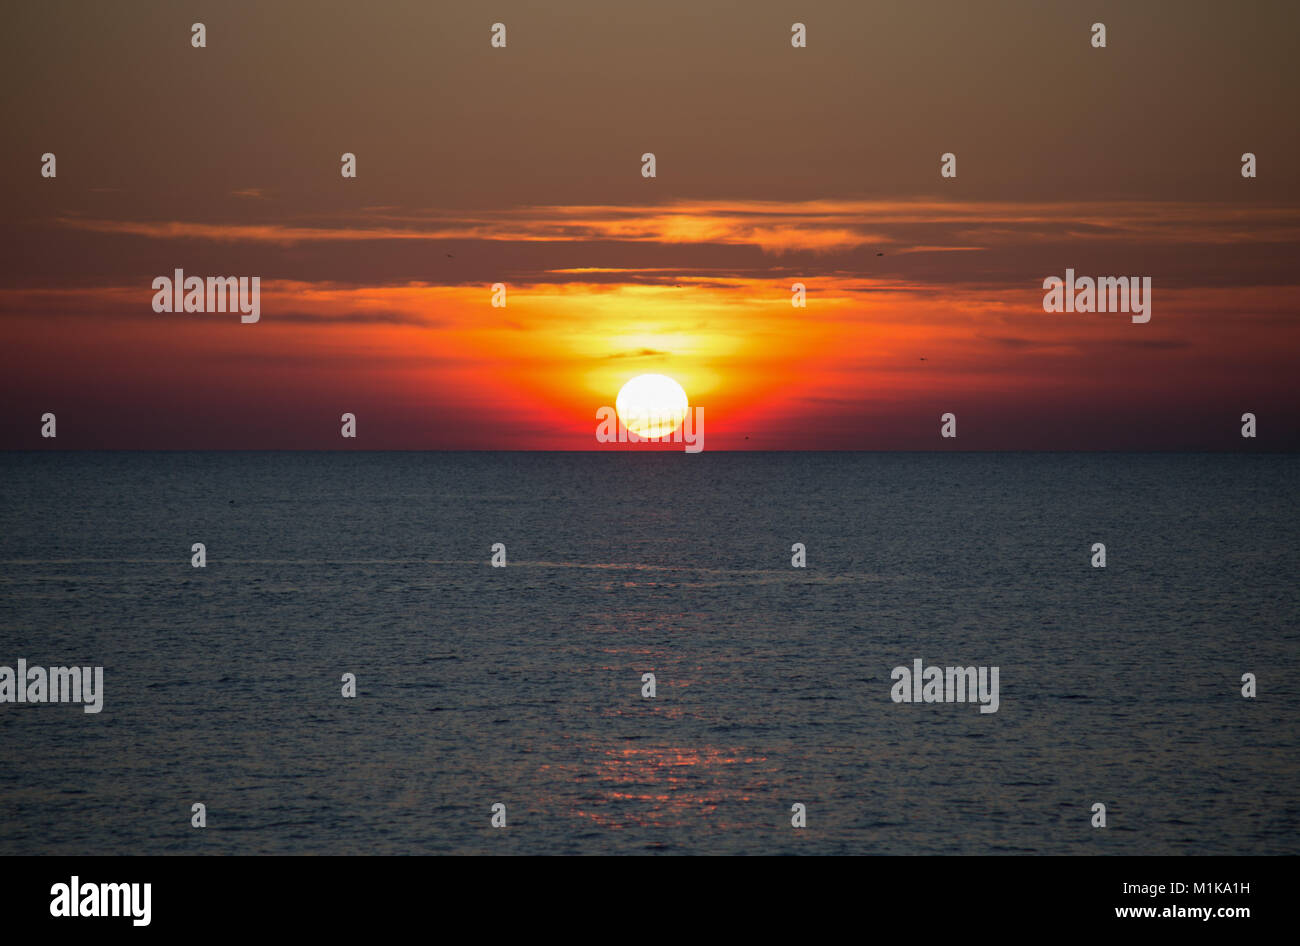 A beautiful sun setting on the horizon on the sea Stock Photo